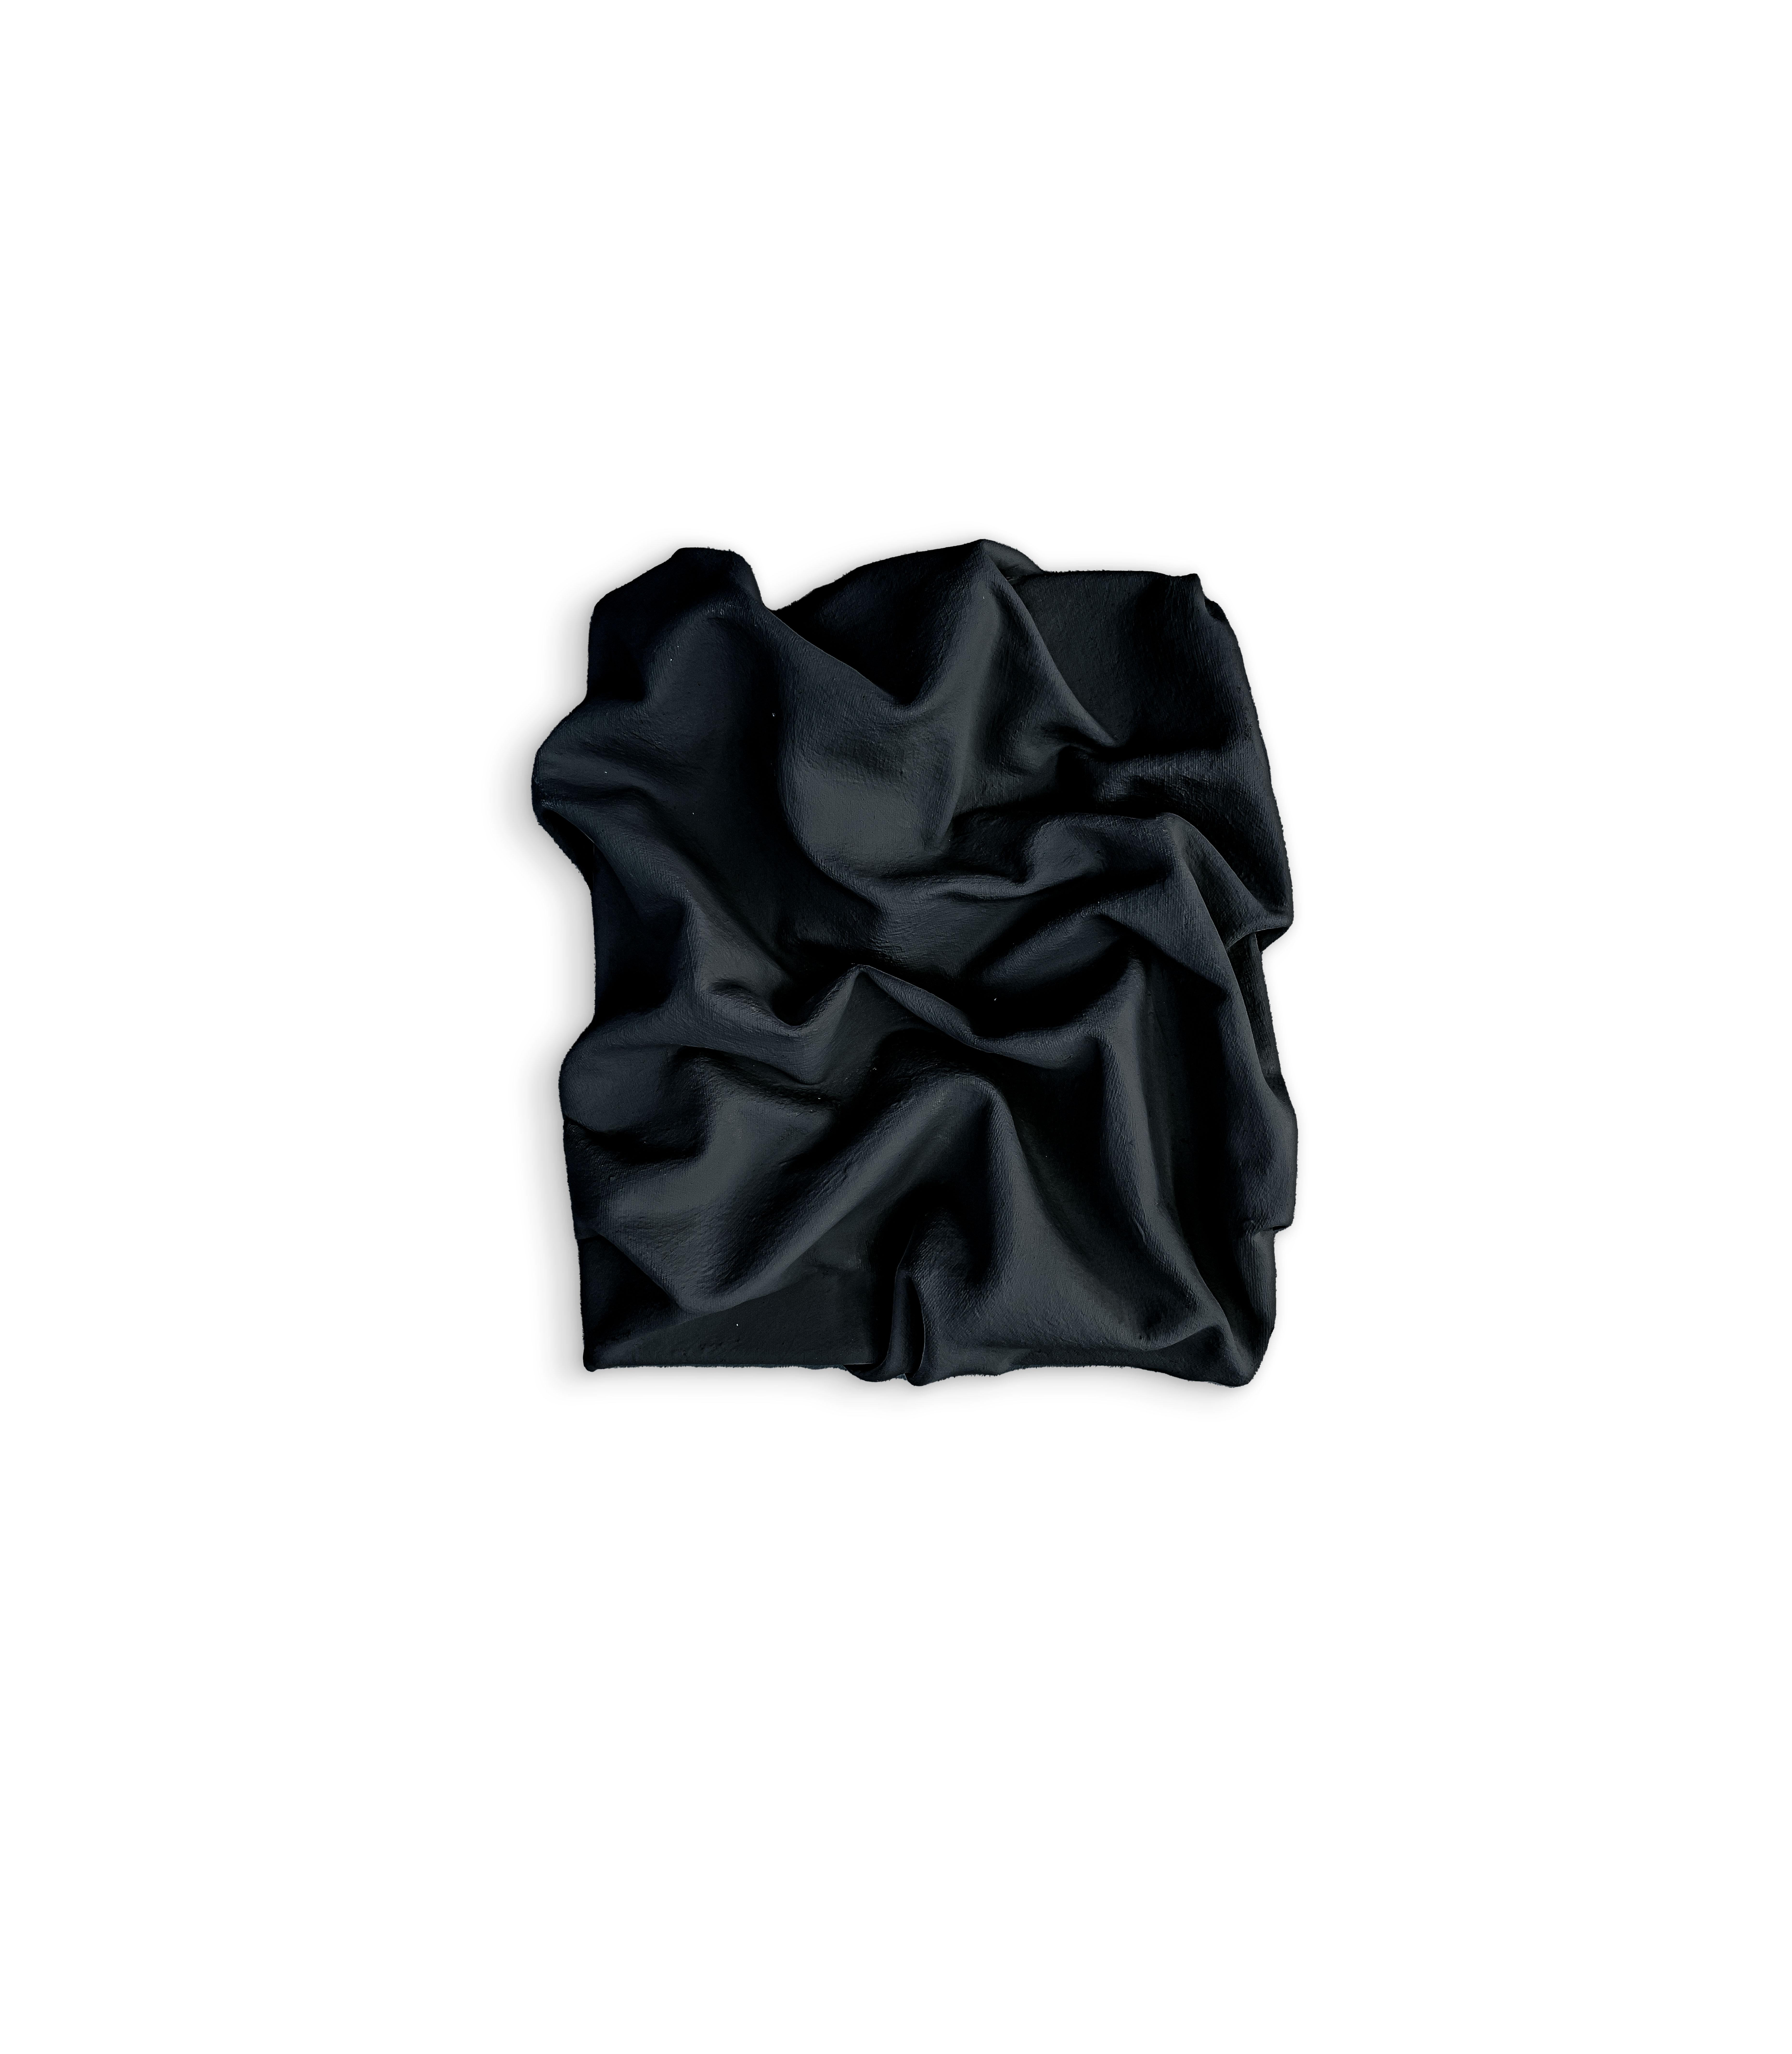 Sahava - Sculpture Mini, schwarz, black, Studio Mykoda, 3D art, 3D Kunst, dreidimensionale Kunst, three dimensional art, textured art, Texture Kunst, skulpturale Kunst, sculptural art, curated, Acryl Gemaelde, acryl art, Muenchen, munich, Deutschland, Germany, Leinwand, minimalistische Kunst, minimalistic art